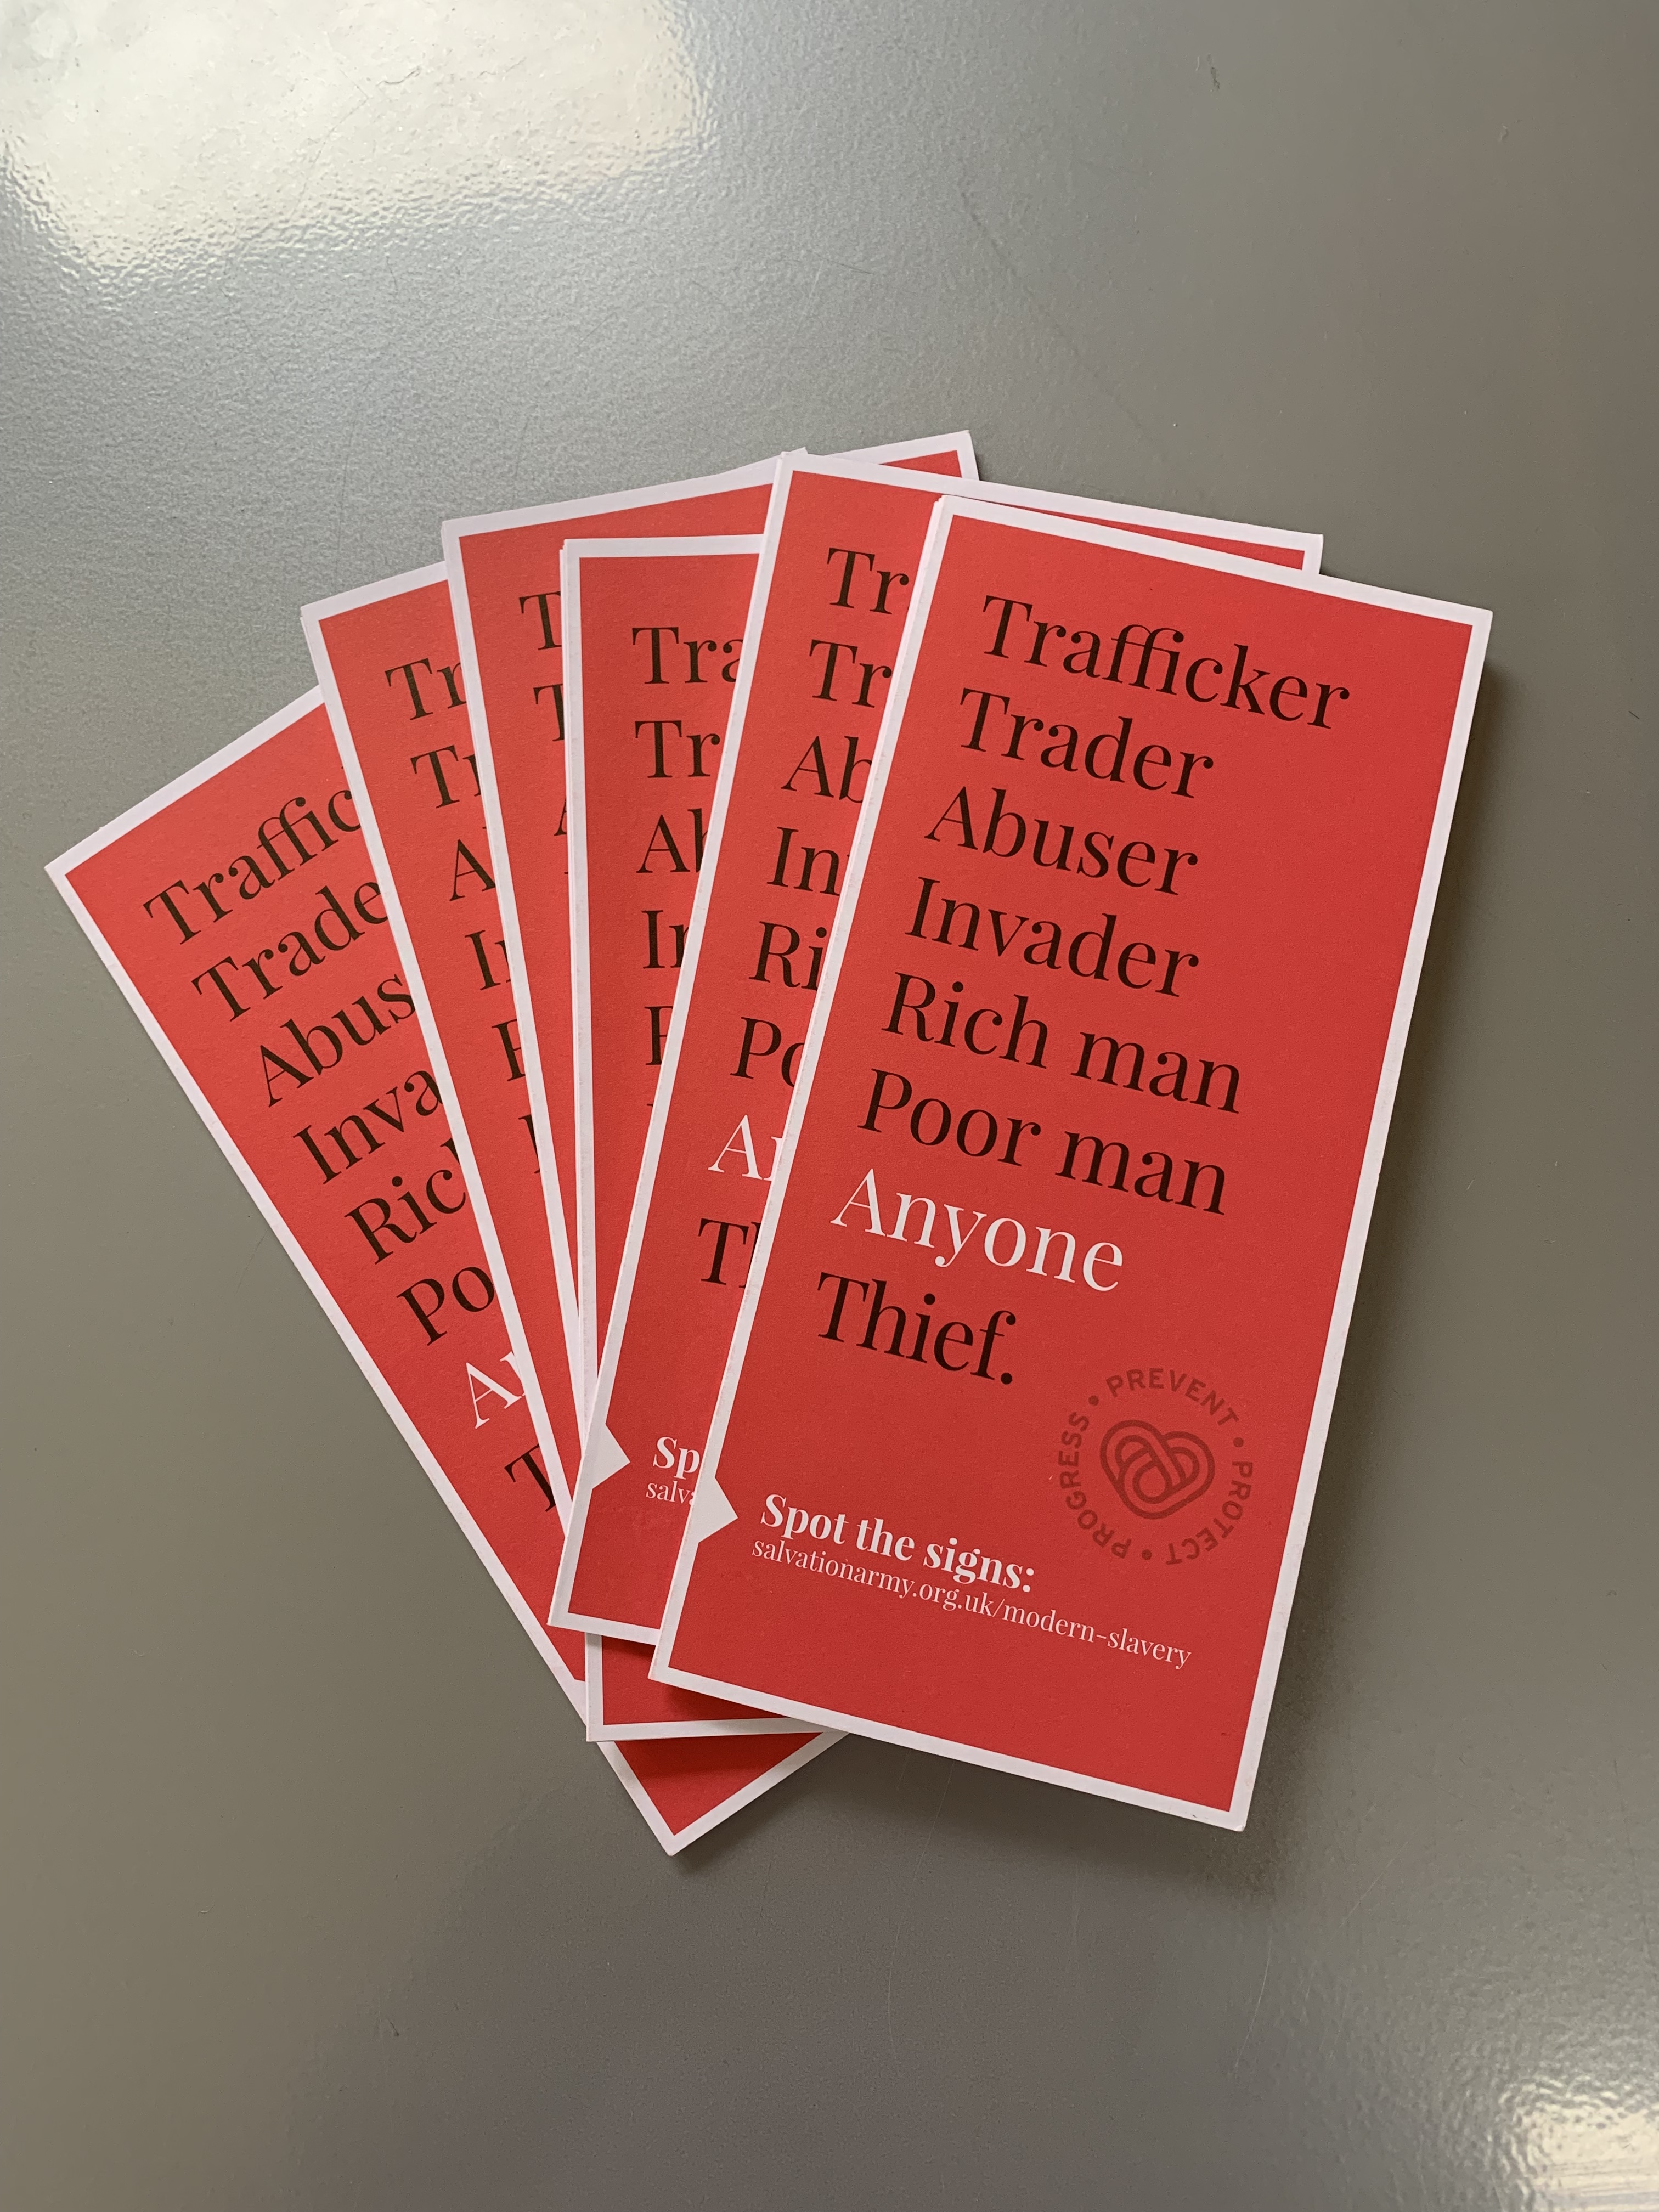 Salvation Army modern slavery leaflets